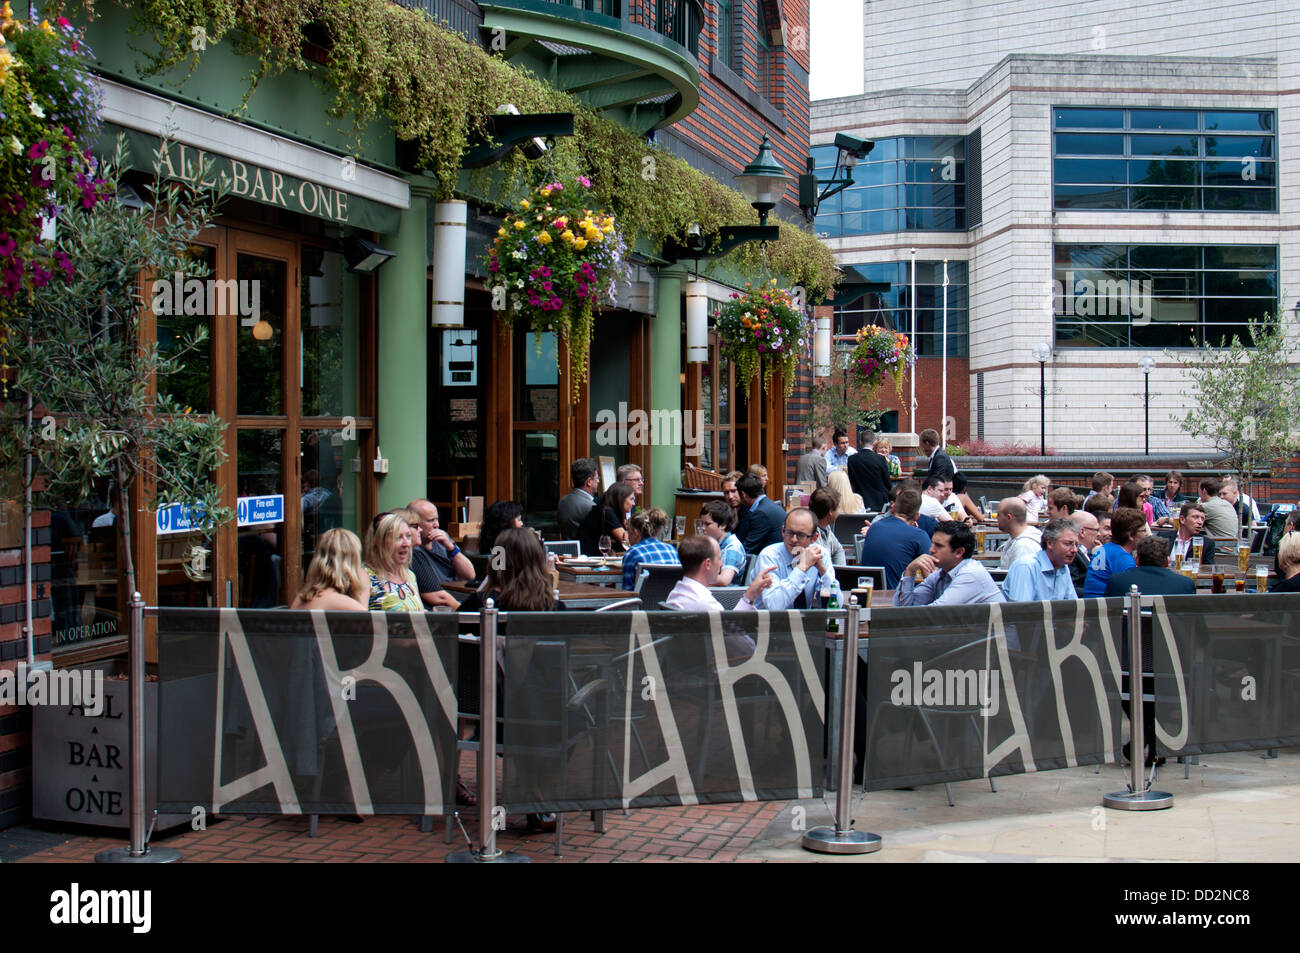 Les gens assis devant un bar de Brindley Place, Birmingham, UK Banque D'Images